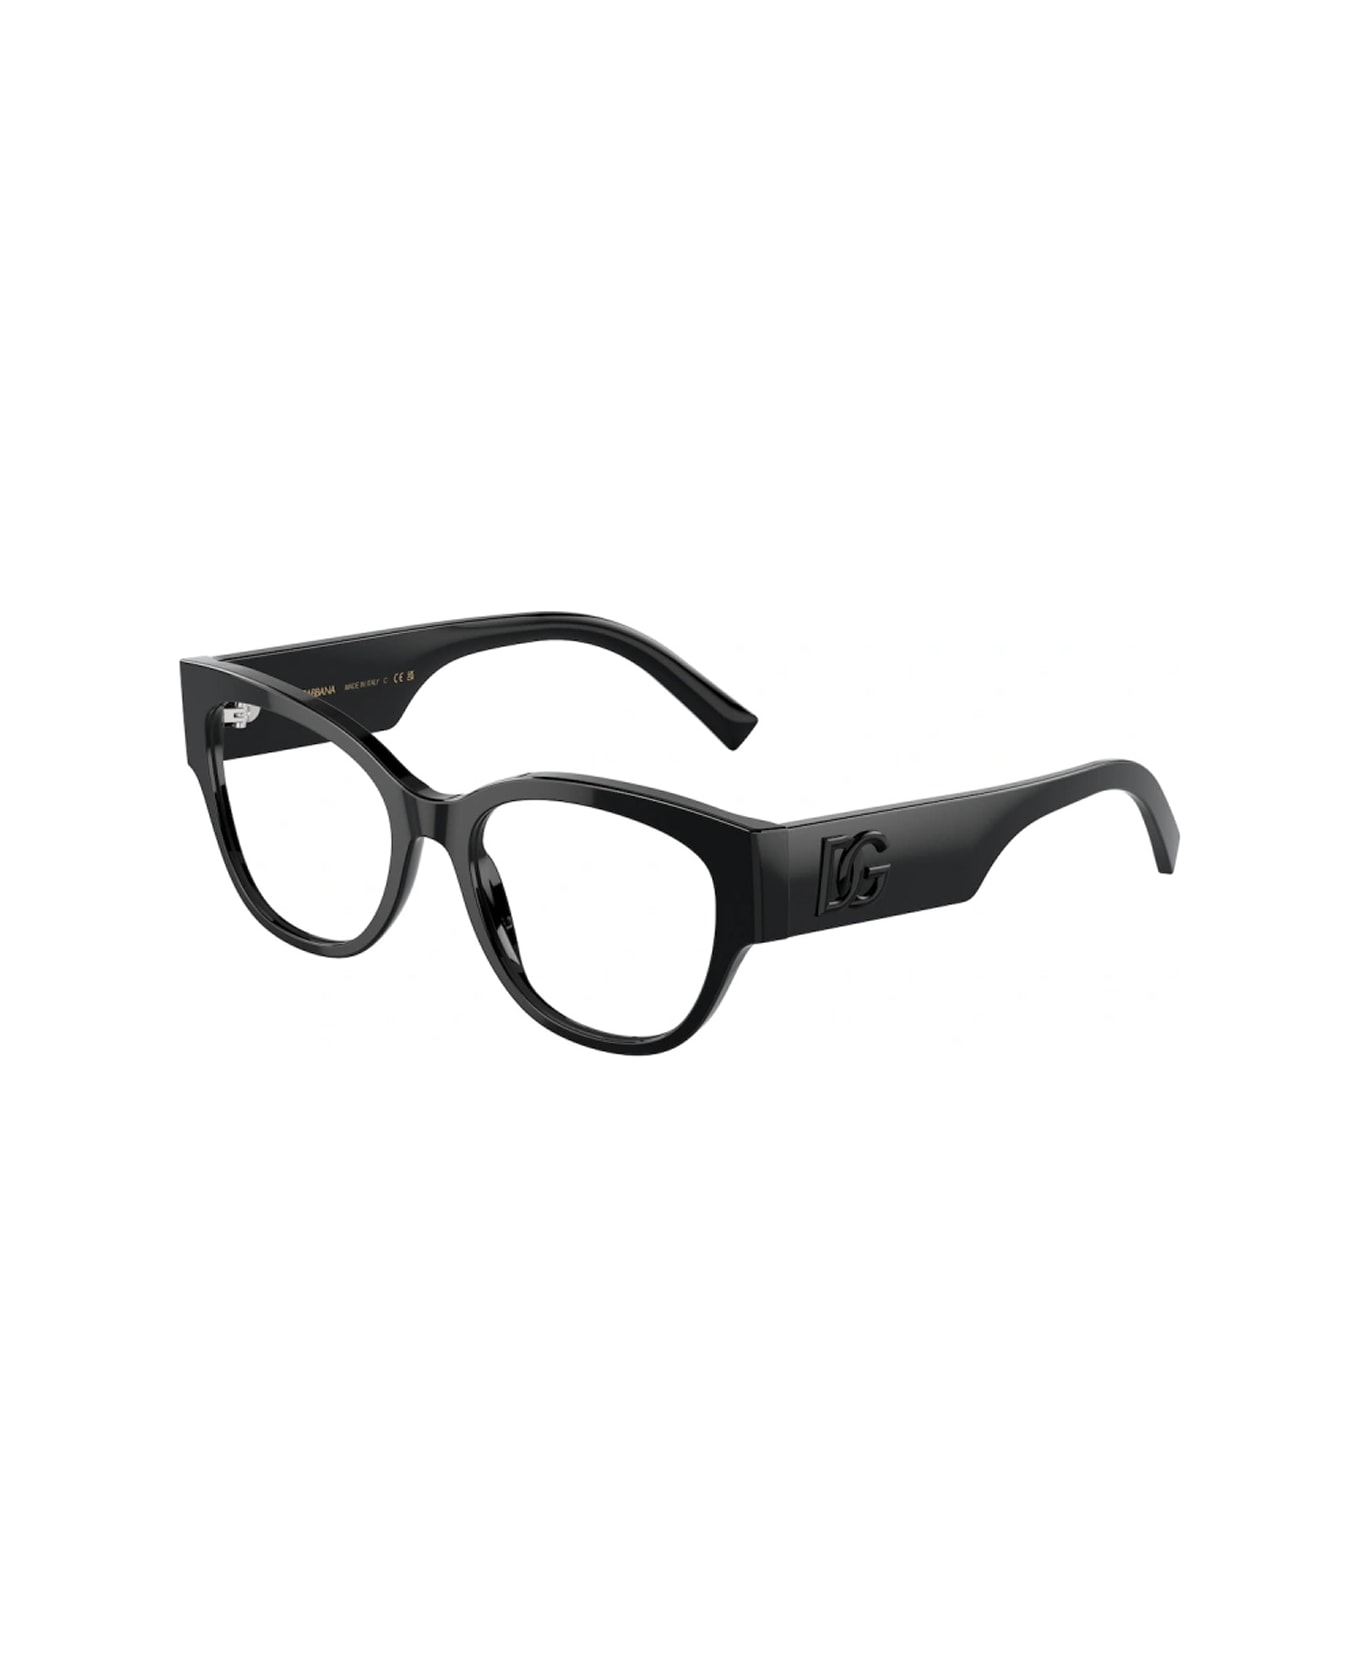 Dolce & Gabbana Eyewear Dg3377 501 Glasses - Nero アイウェア